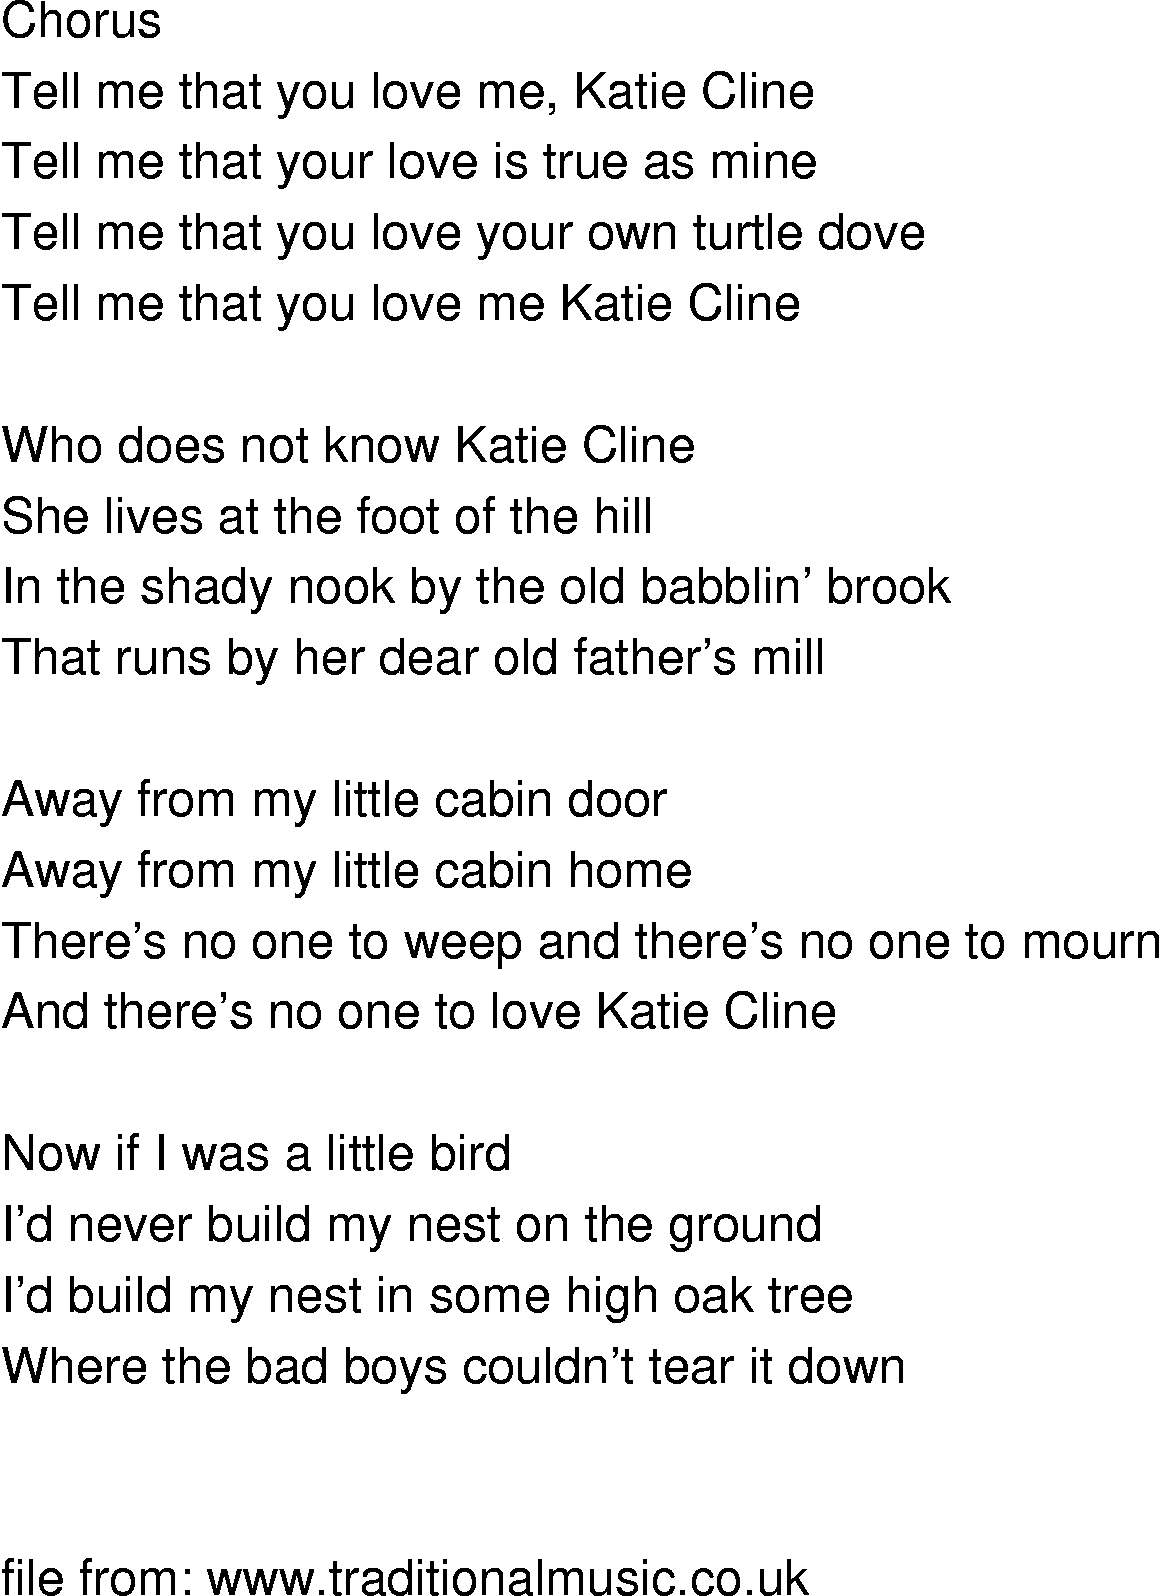 Old-Time (oldtimey) Song Lyrics - katie cline